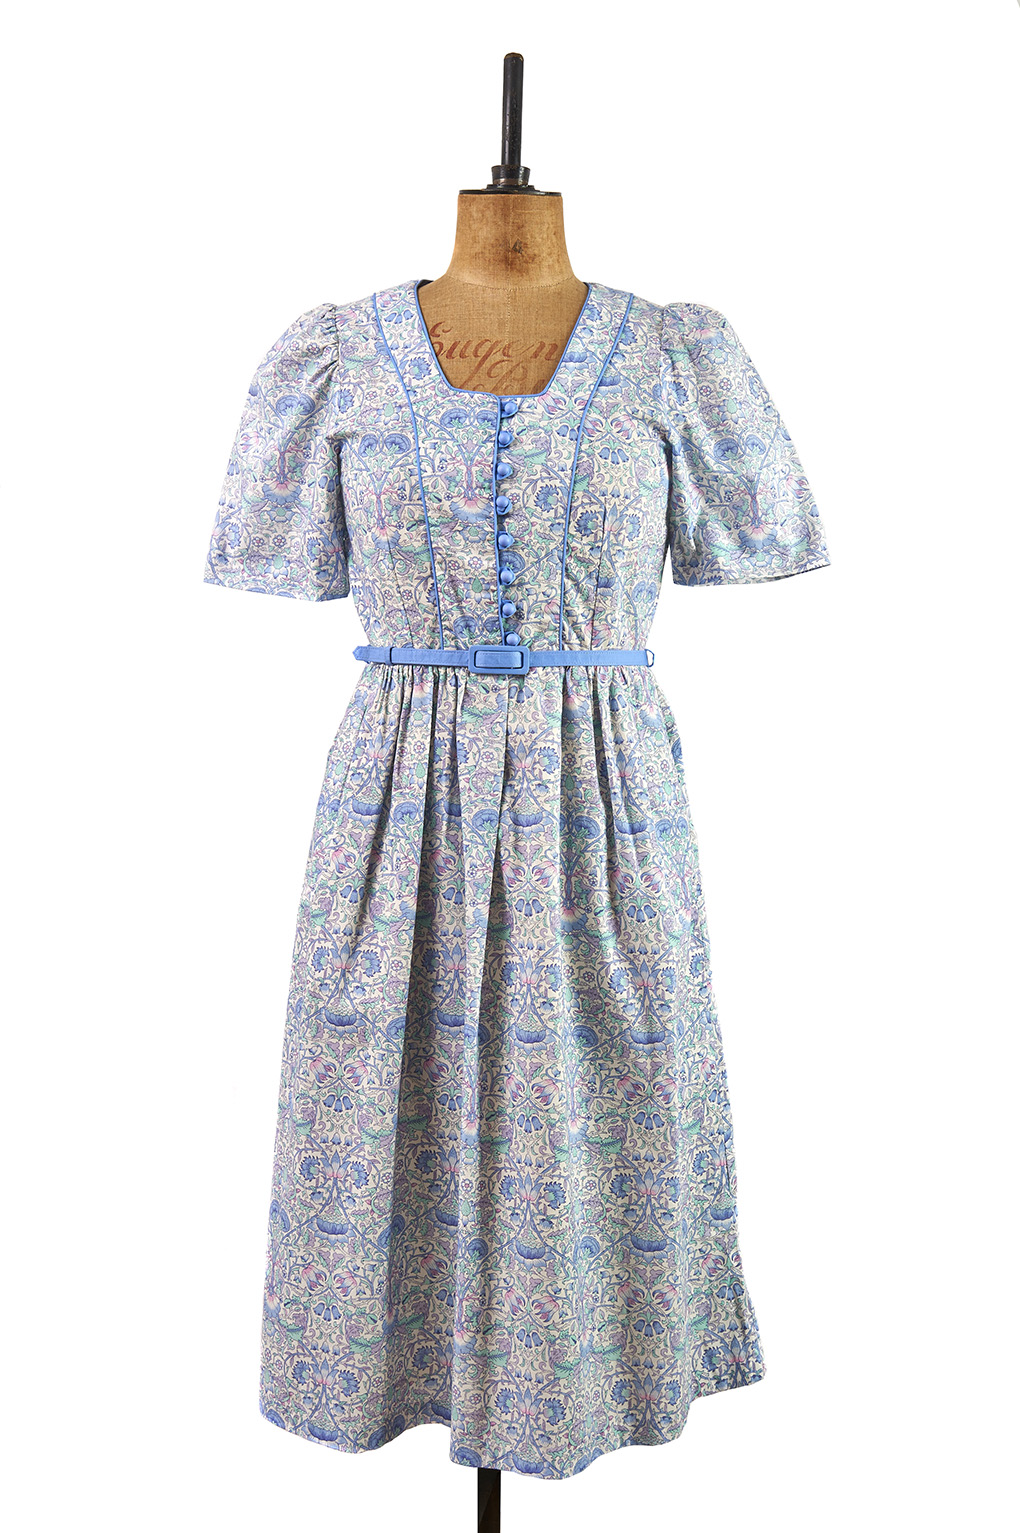 Liberty Print Dress by Marion Donaldson c.1970 | Size 12 - Margot & Hesse